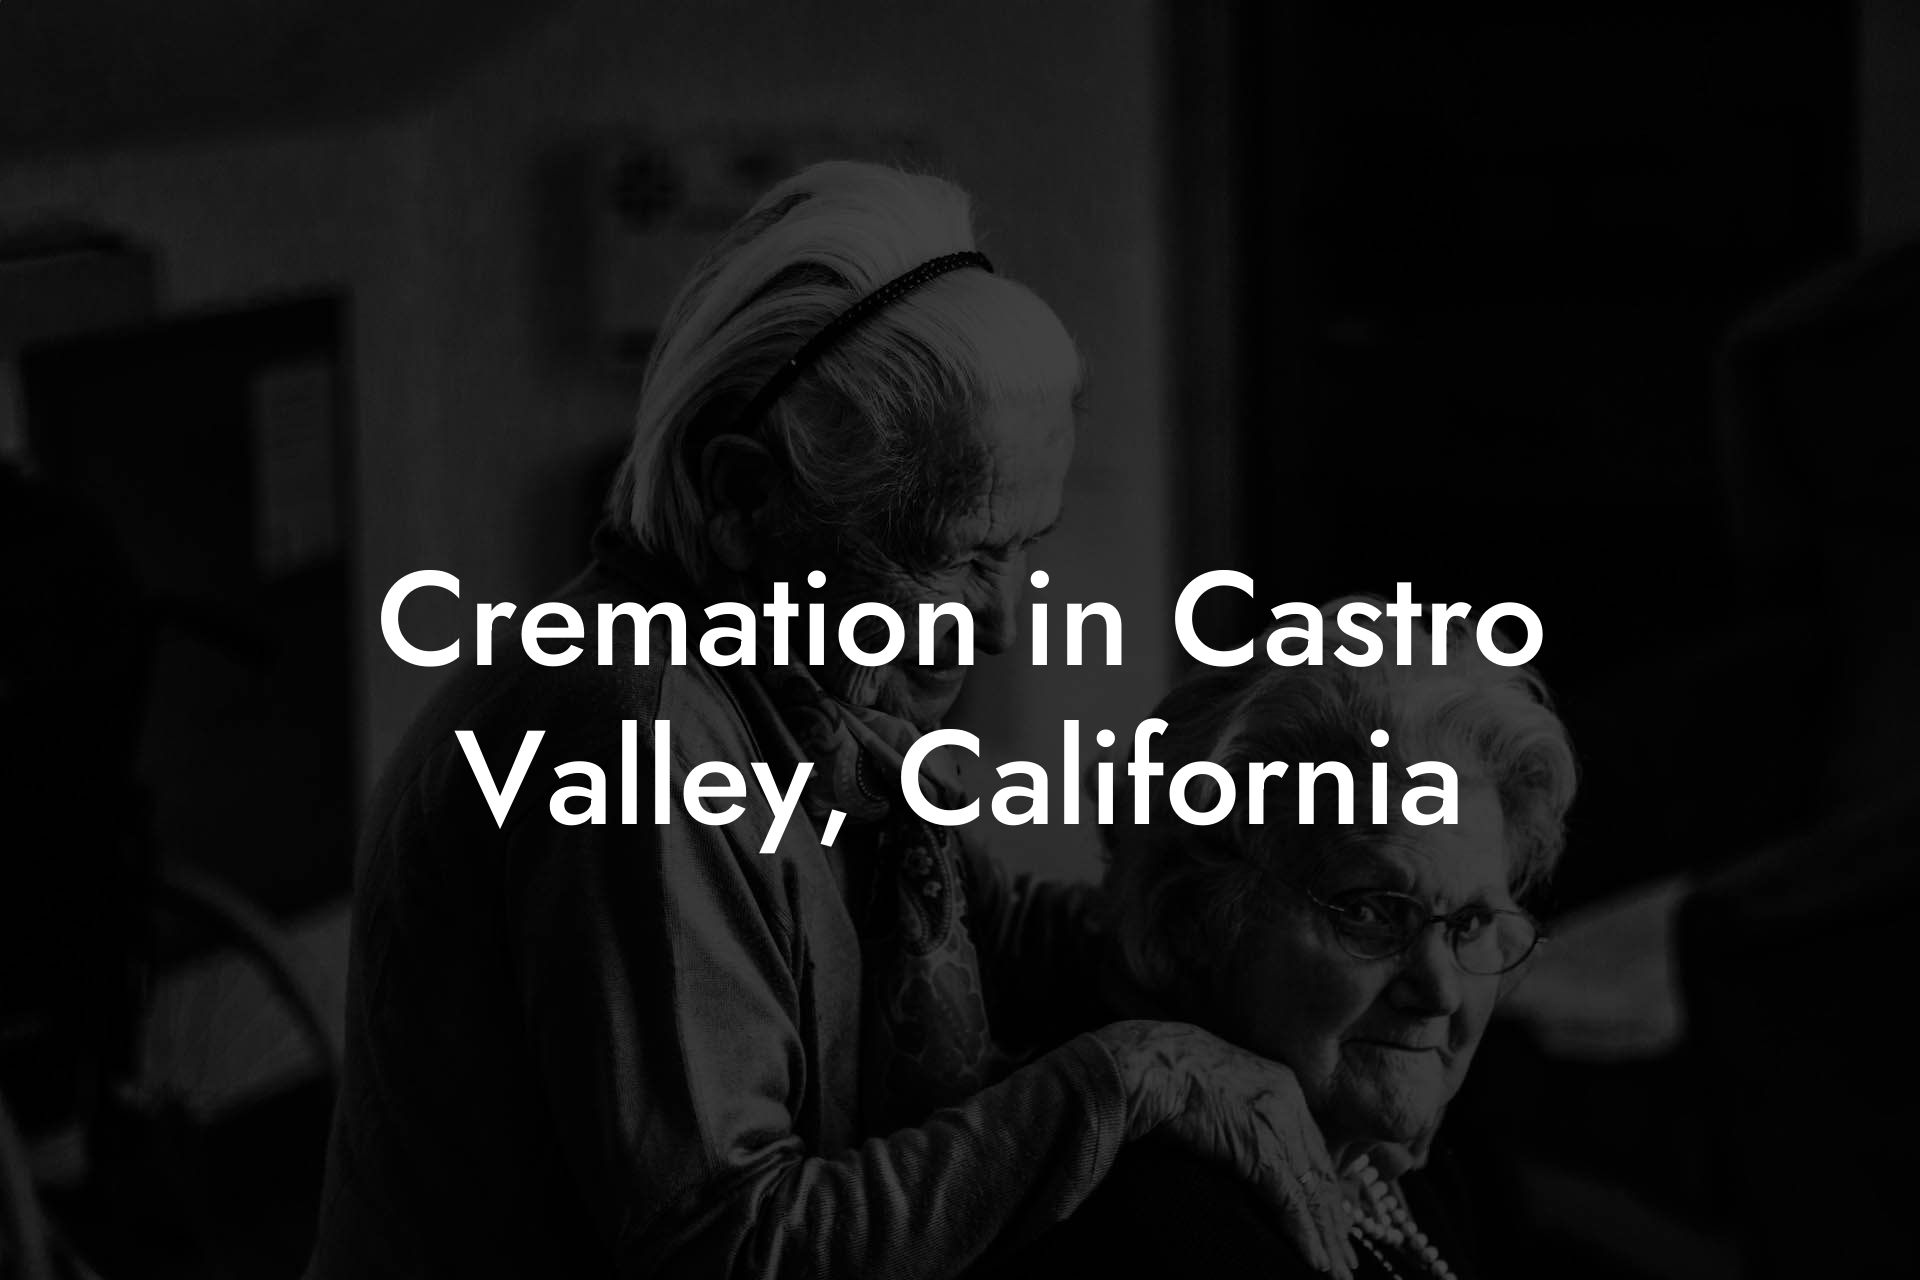 Cremation in Castro Valley, California